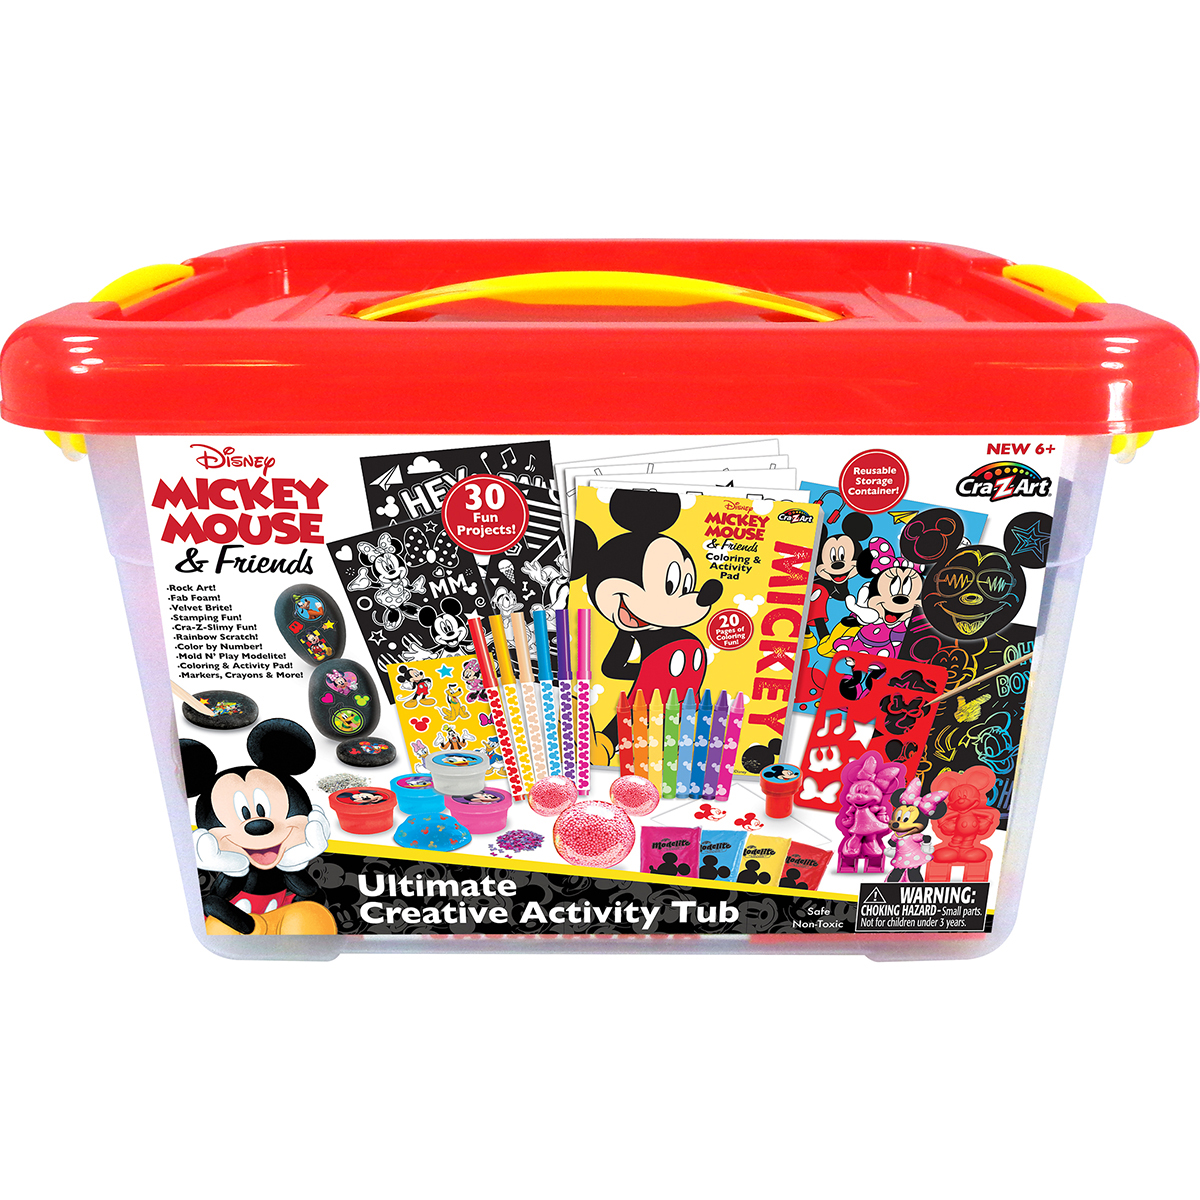 Cra-Z-Art(tm) Disney Mickey Mouse Ultimate Creative Activity Tub